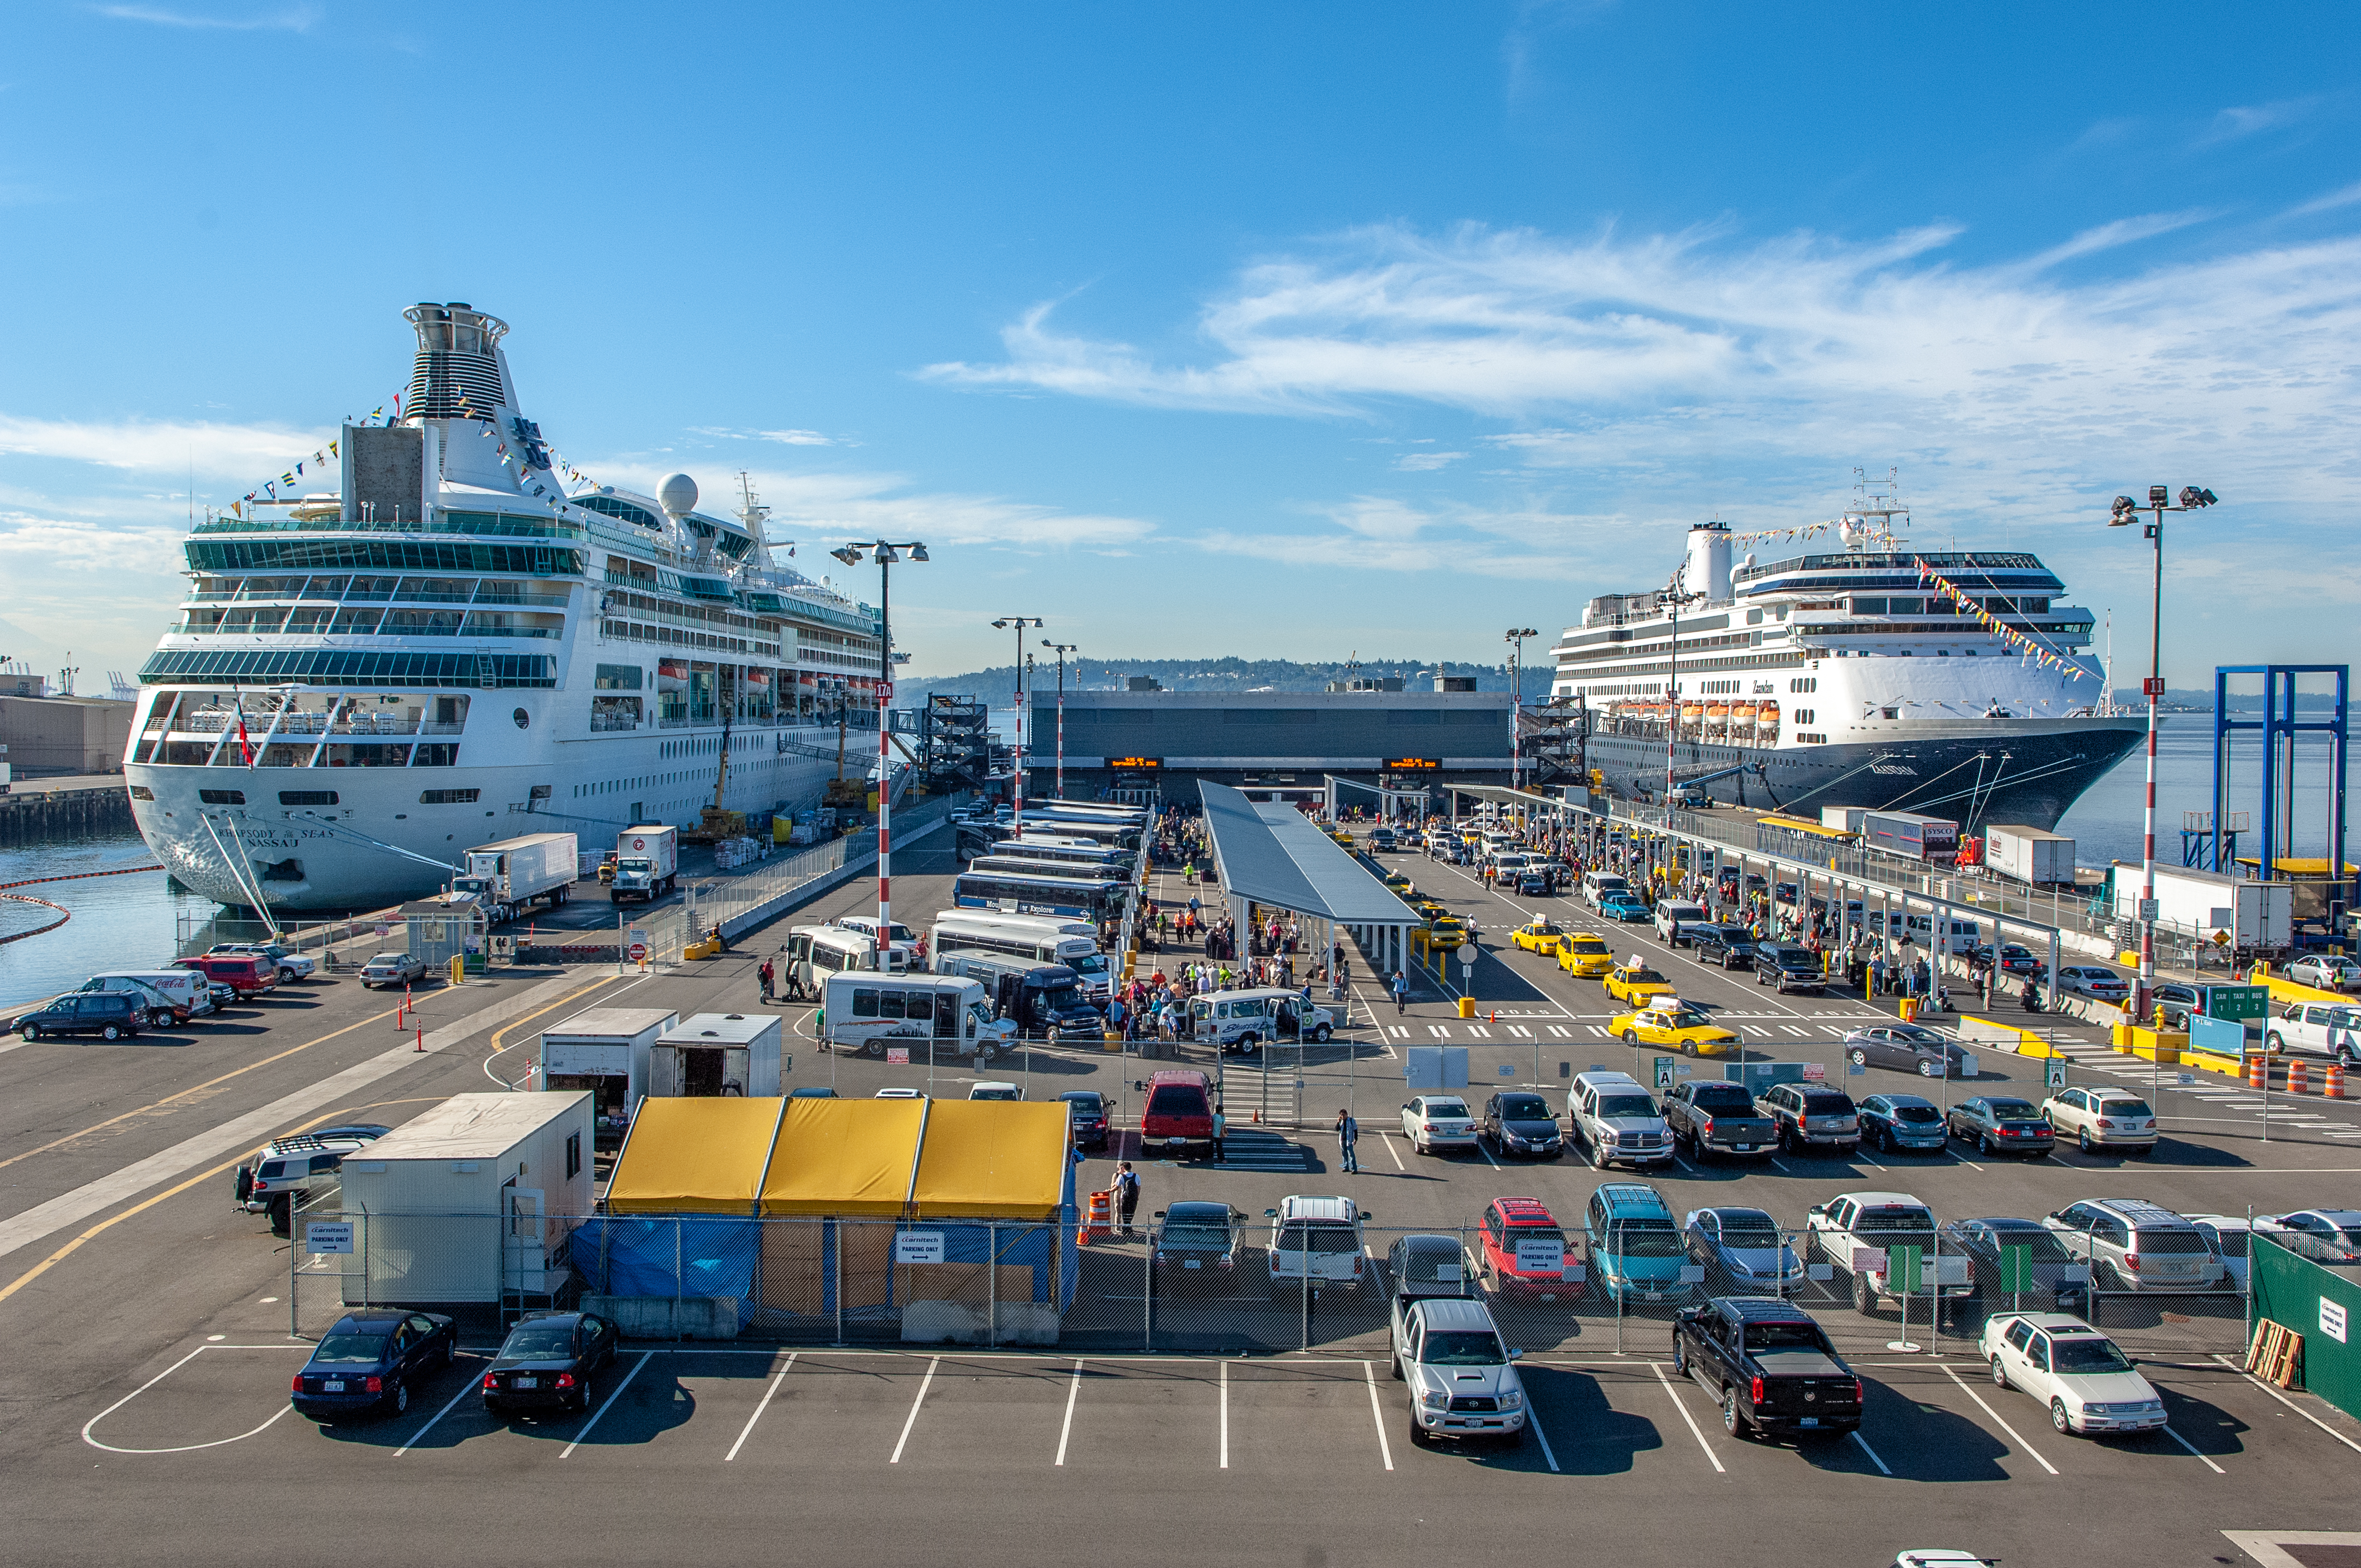 Cruise ships in a terminal